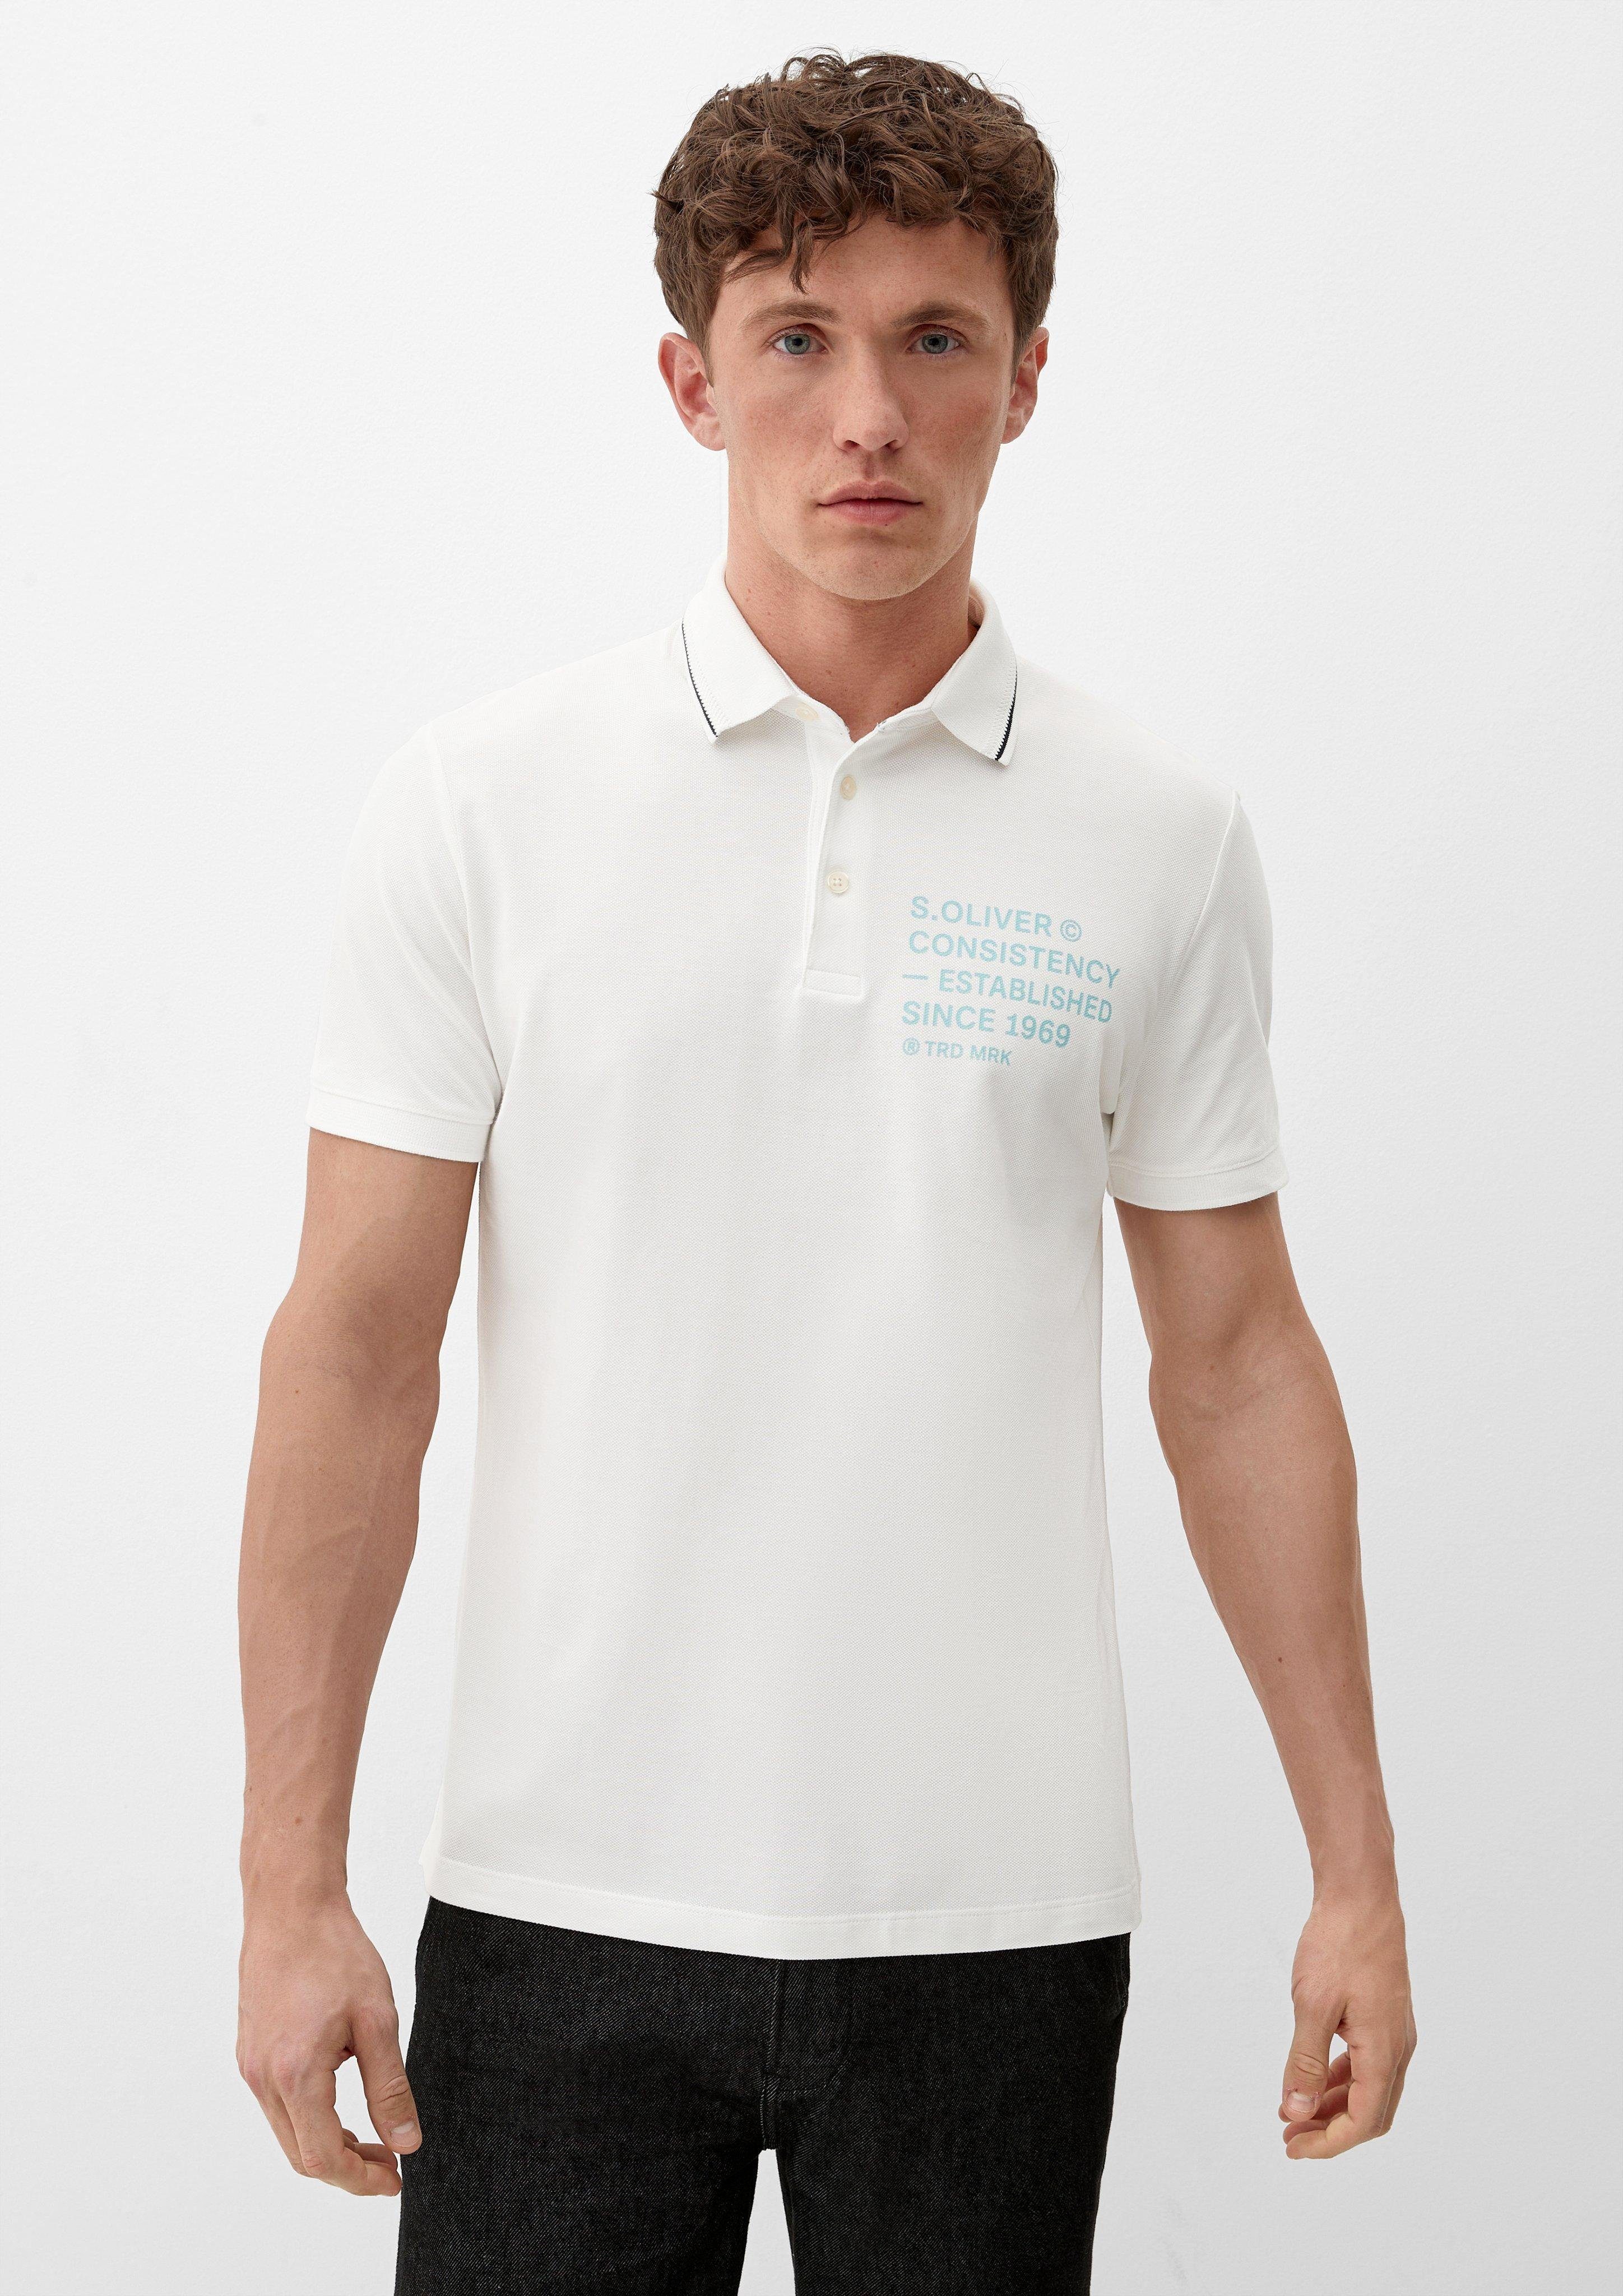 s.Oliver Artwork, Poloshirt mit Blende Kurzarmshirt weiß Piquéstruktur